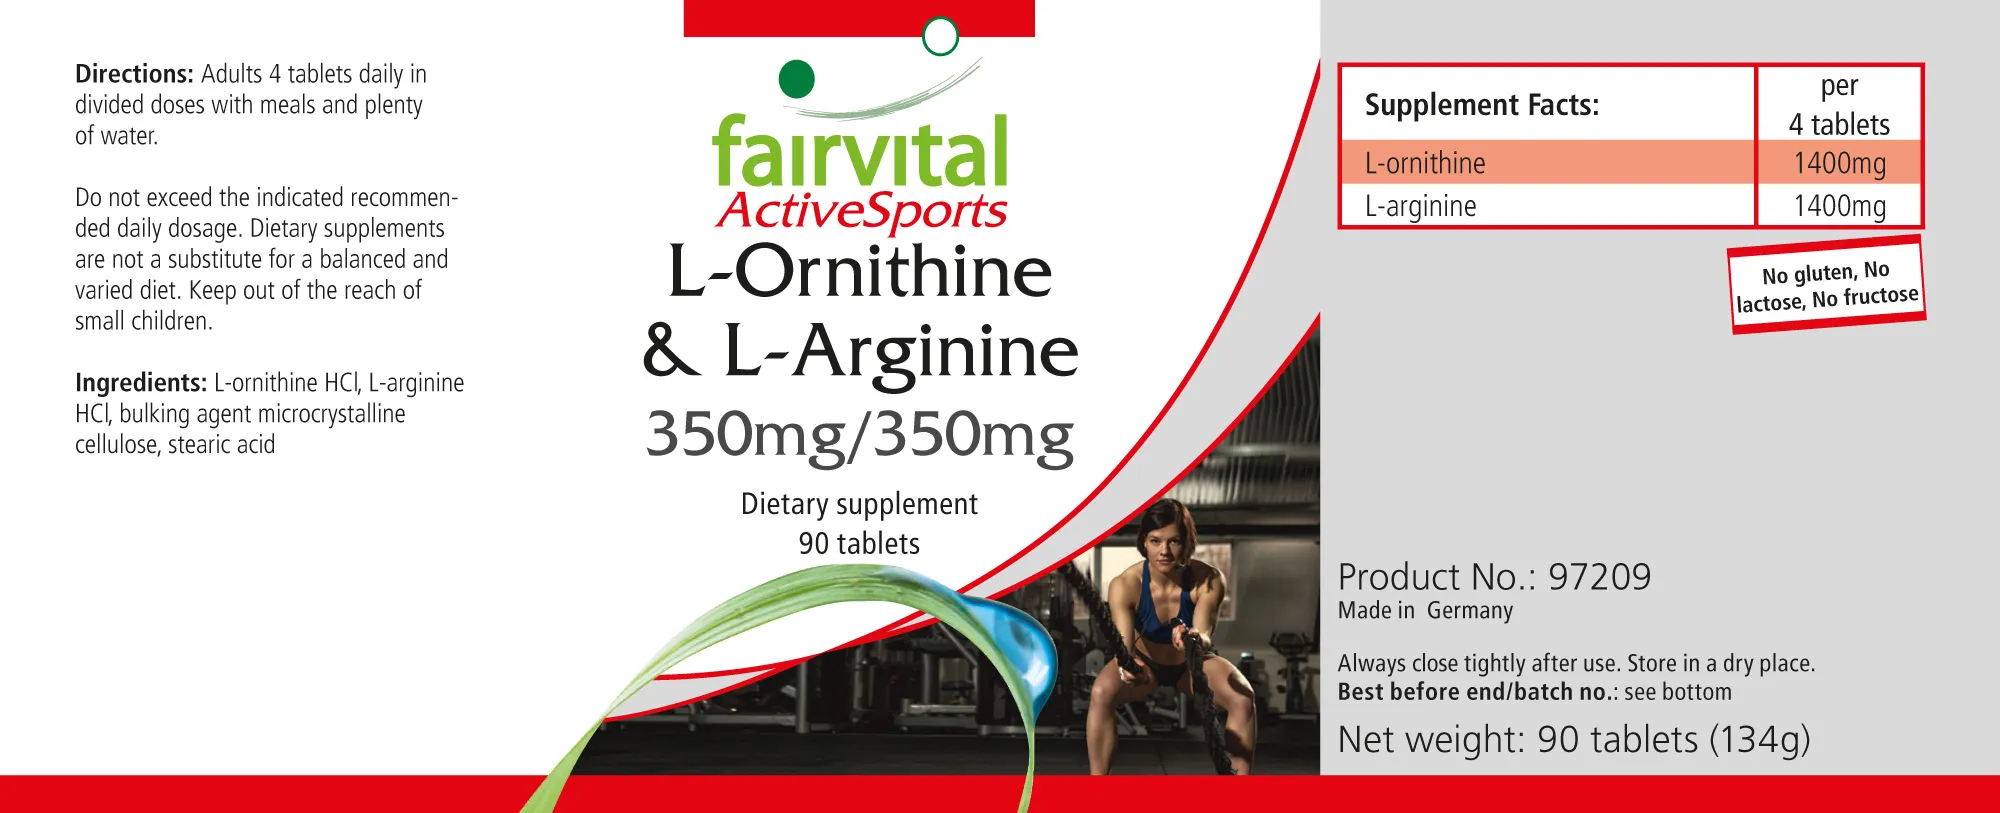 L-ornitina & L-arginina 350mg - 90 compresse